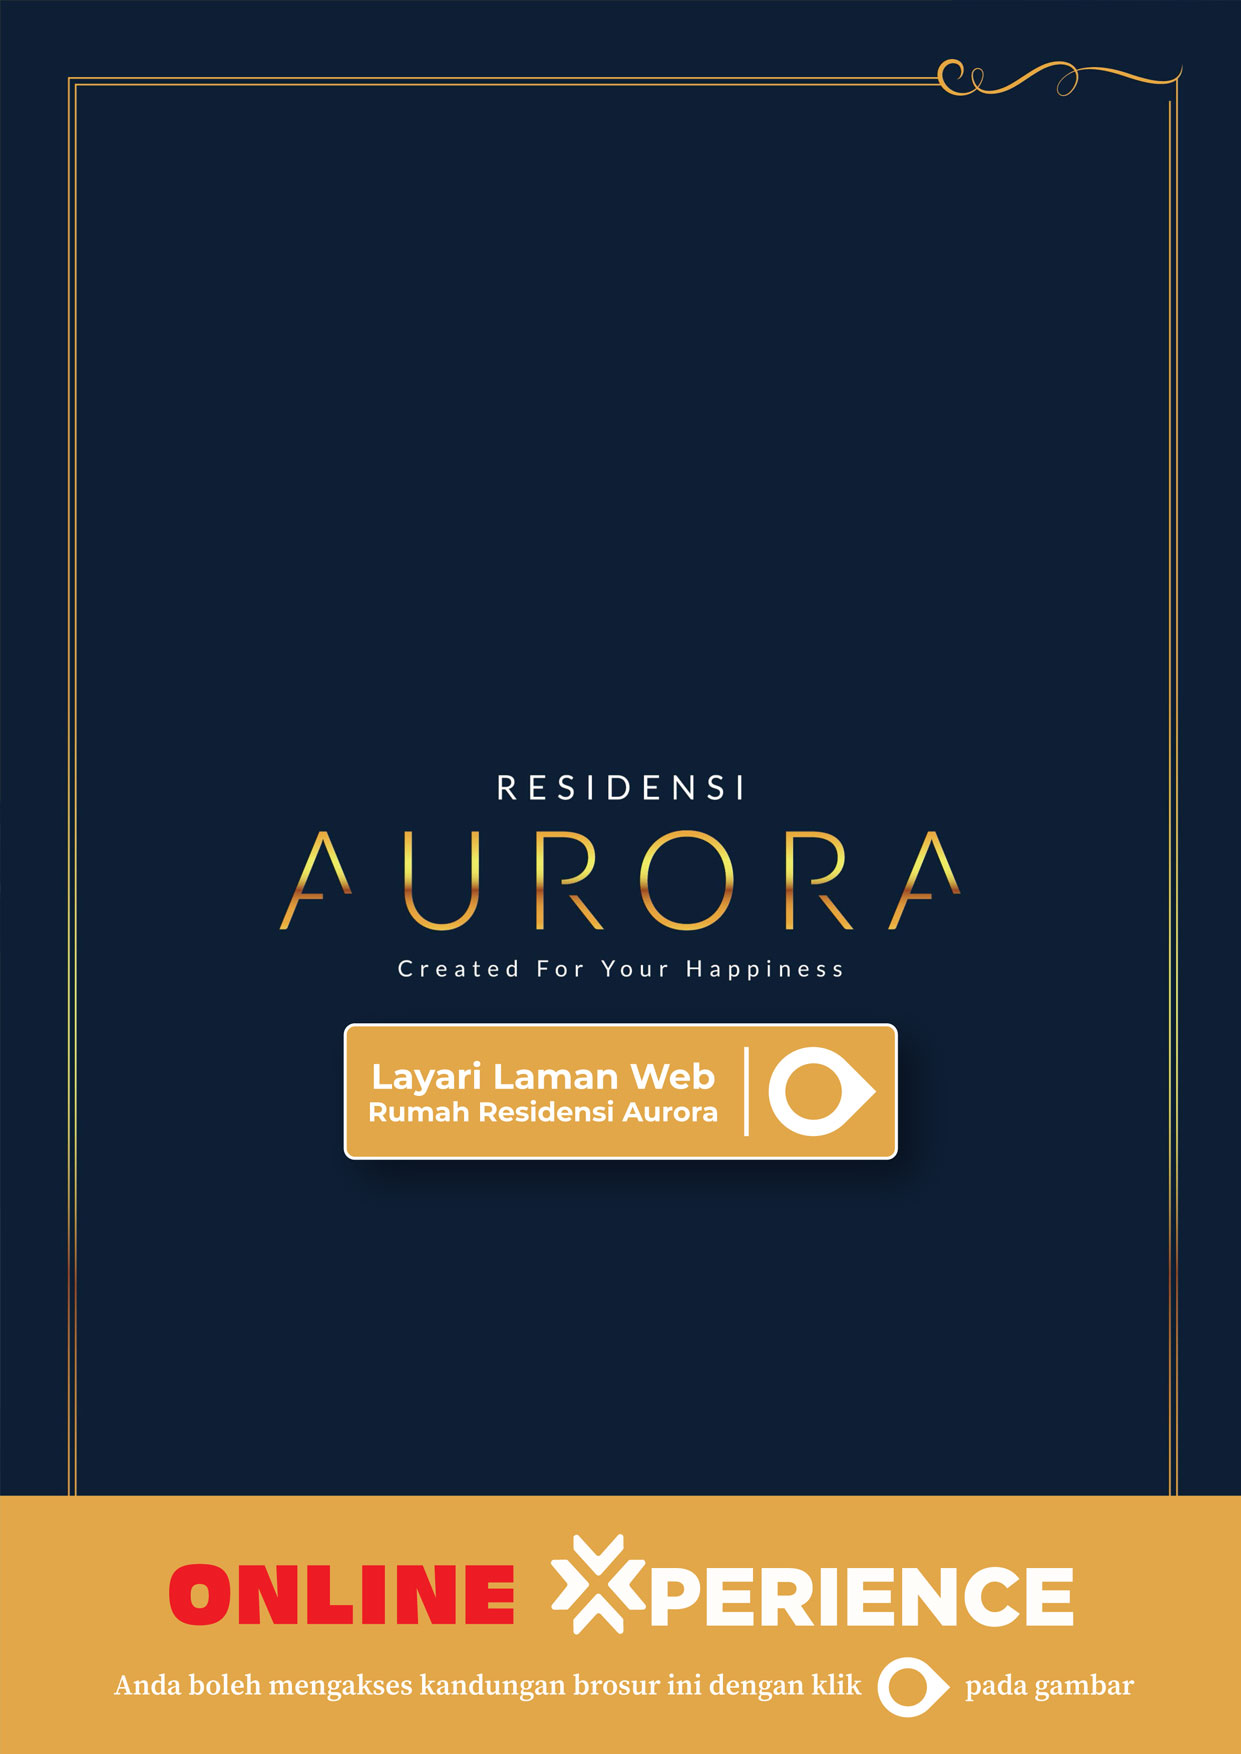 Muat turun brosur interatif PKNS - Residensi Aurora - Cyberjaya